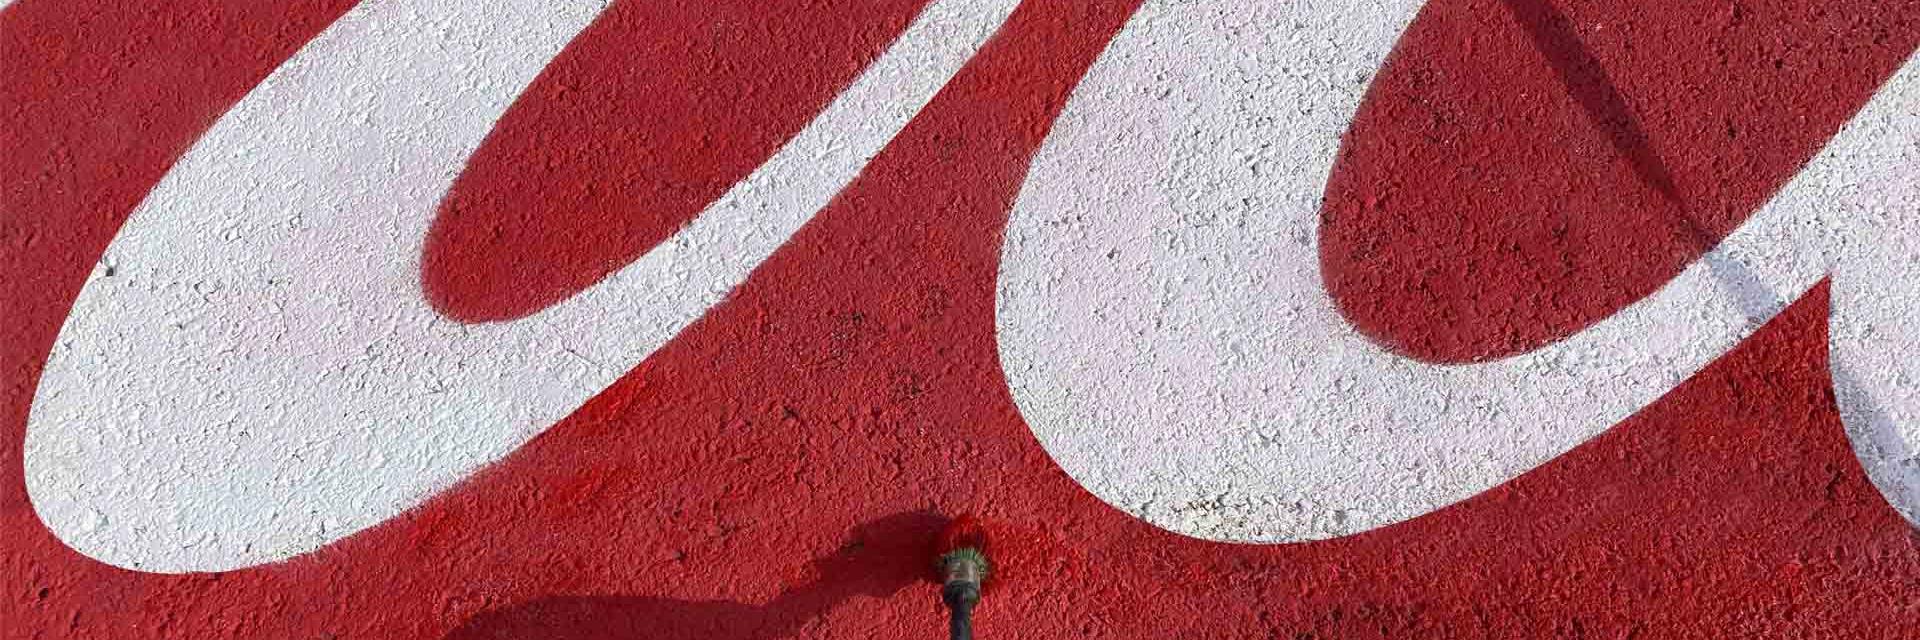 Marquage au sol : logo Coca Cola géant